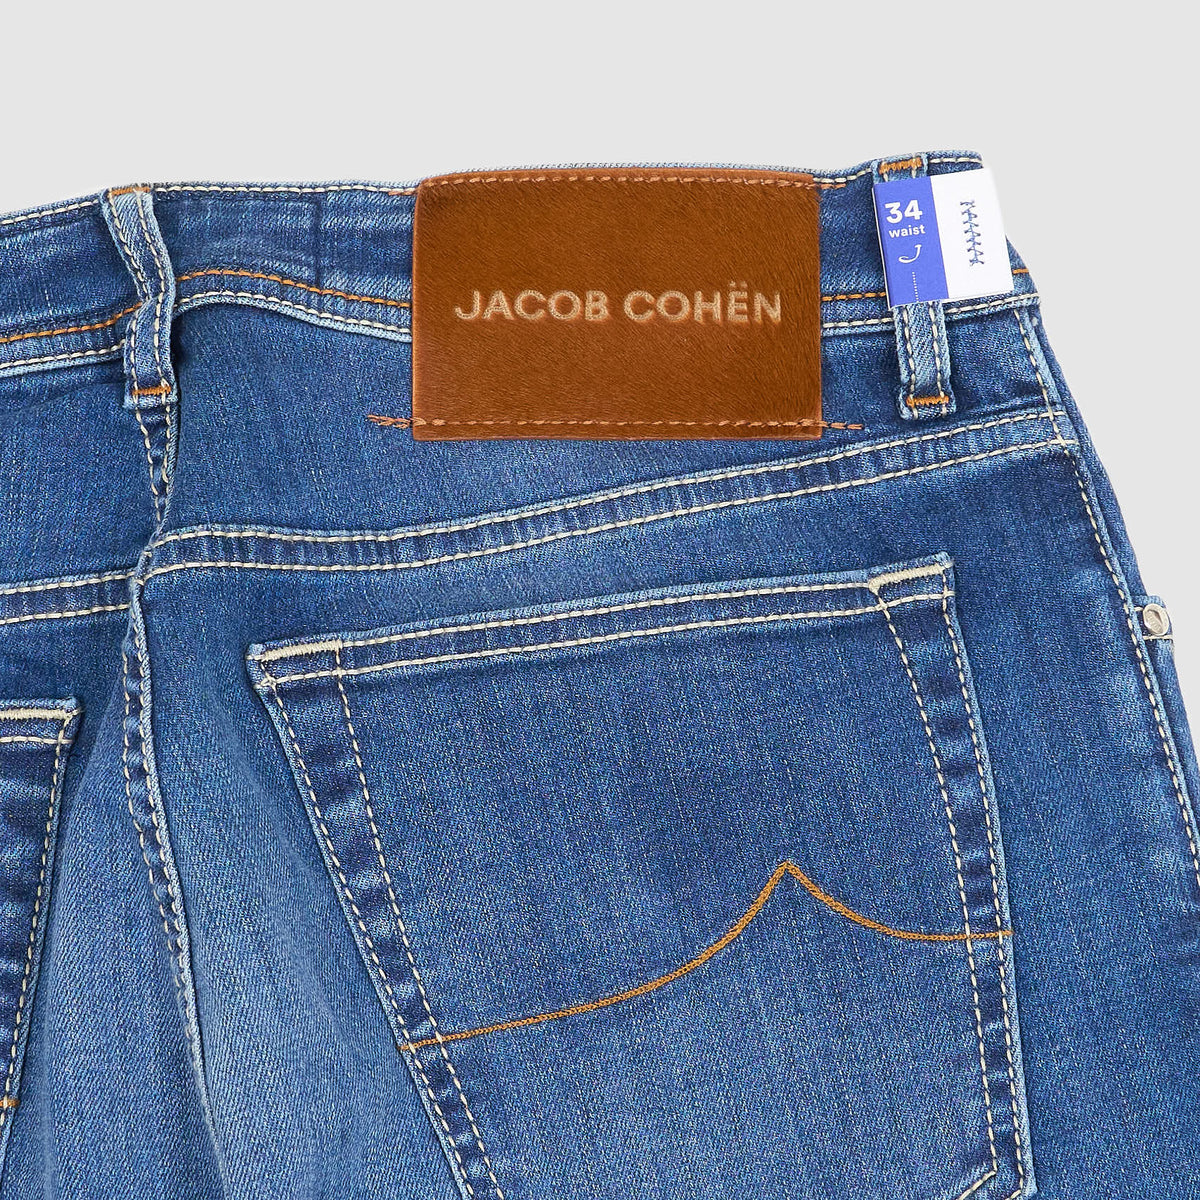 Jacob Cohen Rare Luxury Jeans Stone Washed